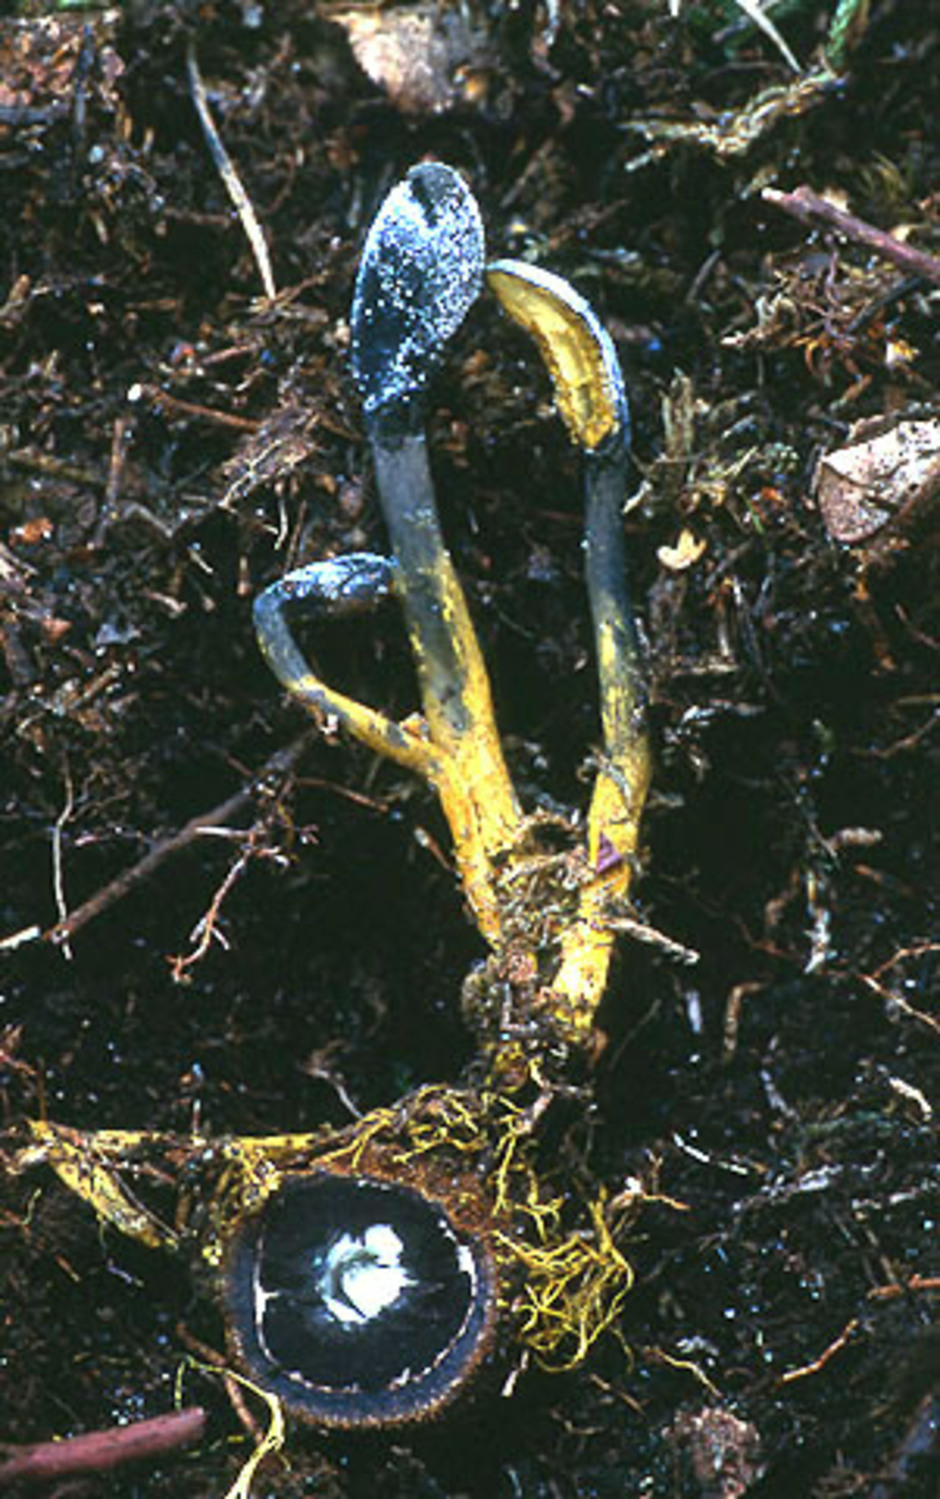 Smal svampklubba, Cordyceps ophioglossoides på marmorerad hjorttryffel, Elaphomyces muricatus.